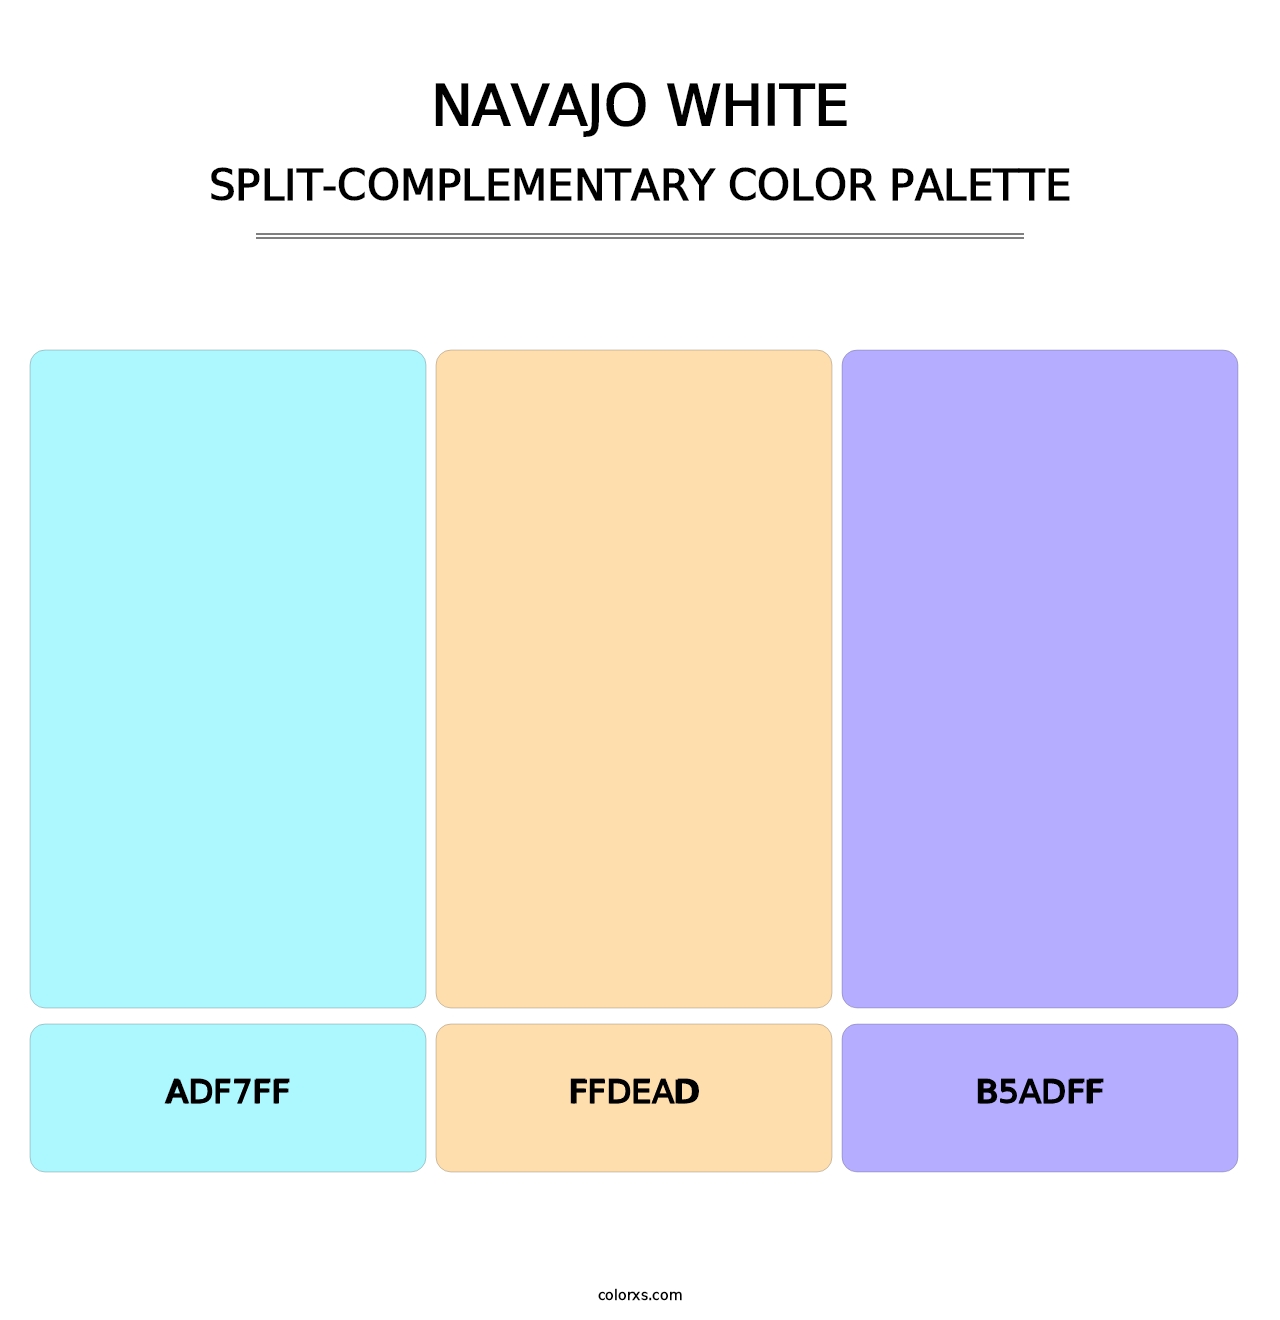 Navajo White - Split-Complementary Color Palette